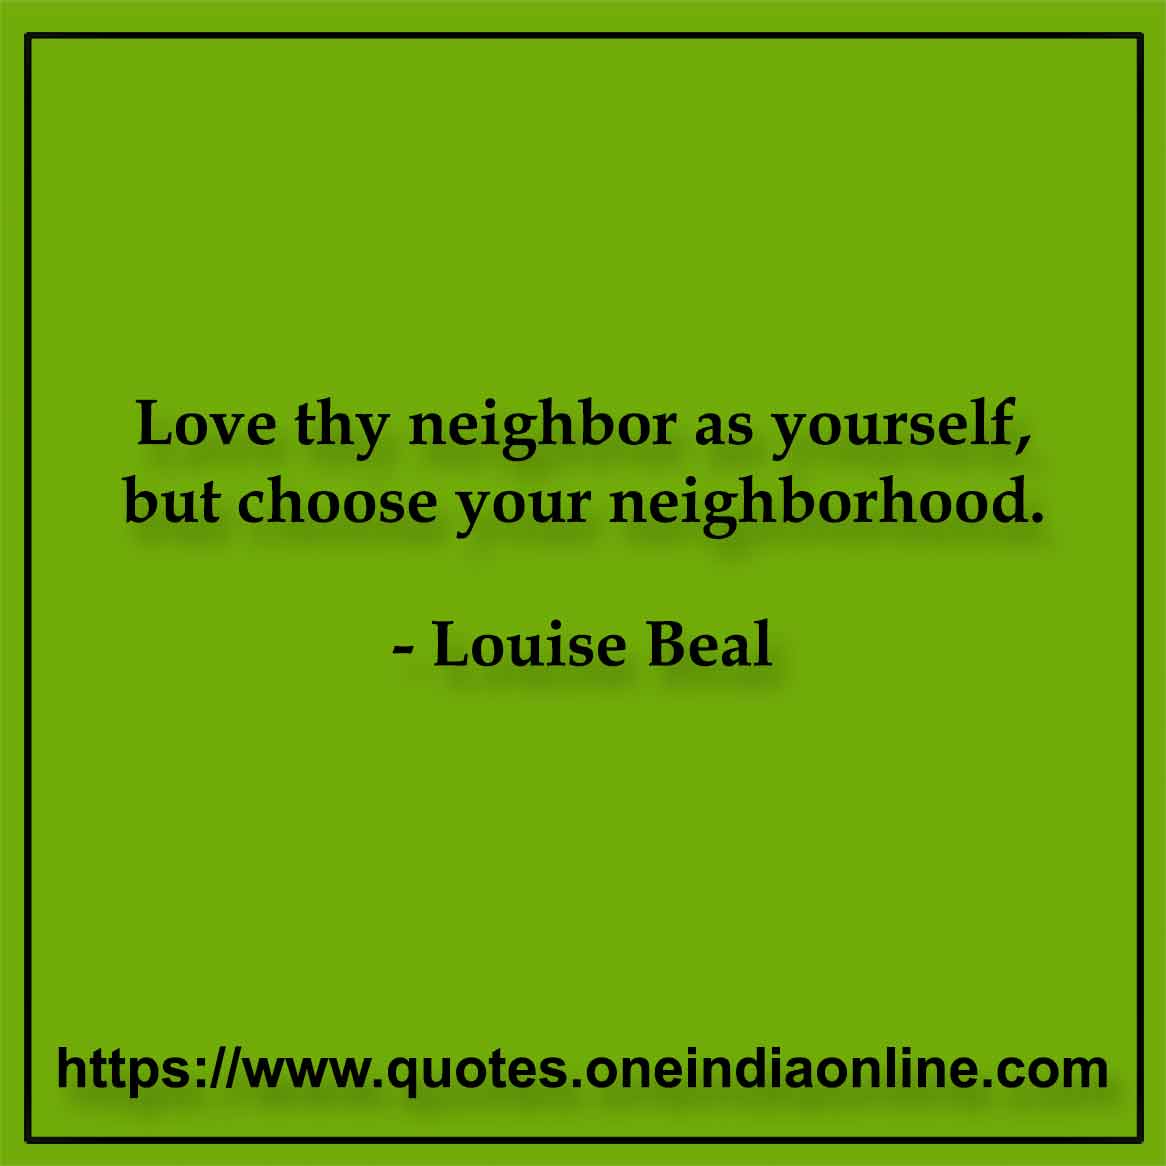 Love thy neighbor as yourself, but choose your neighborhood.

- Louise Beal